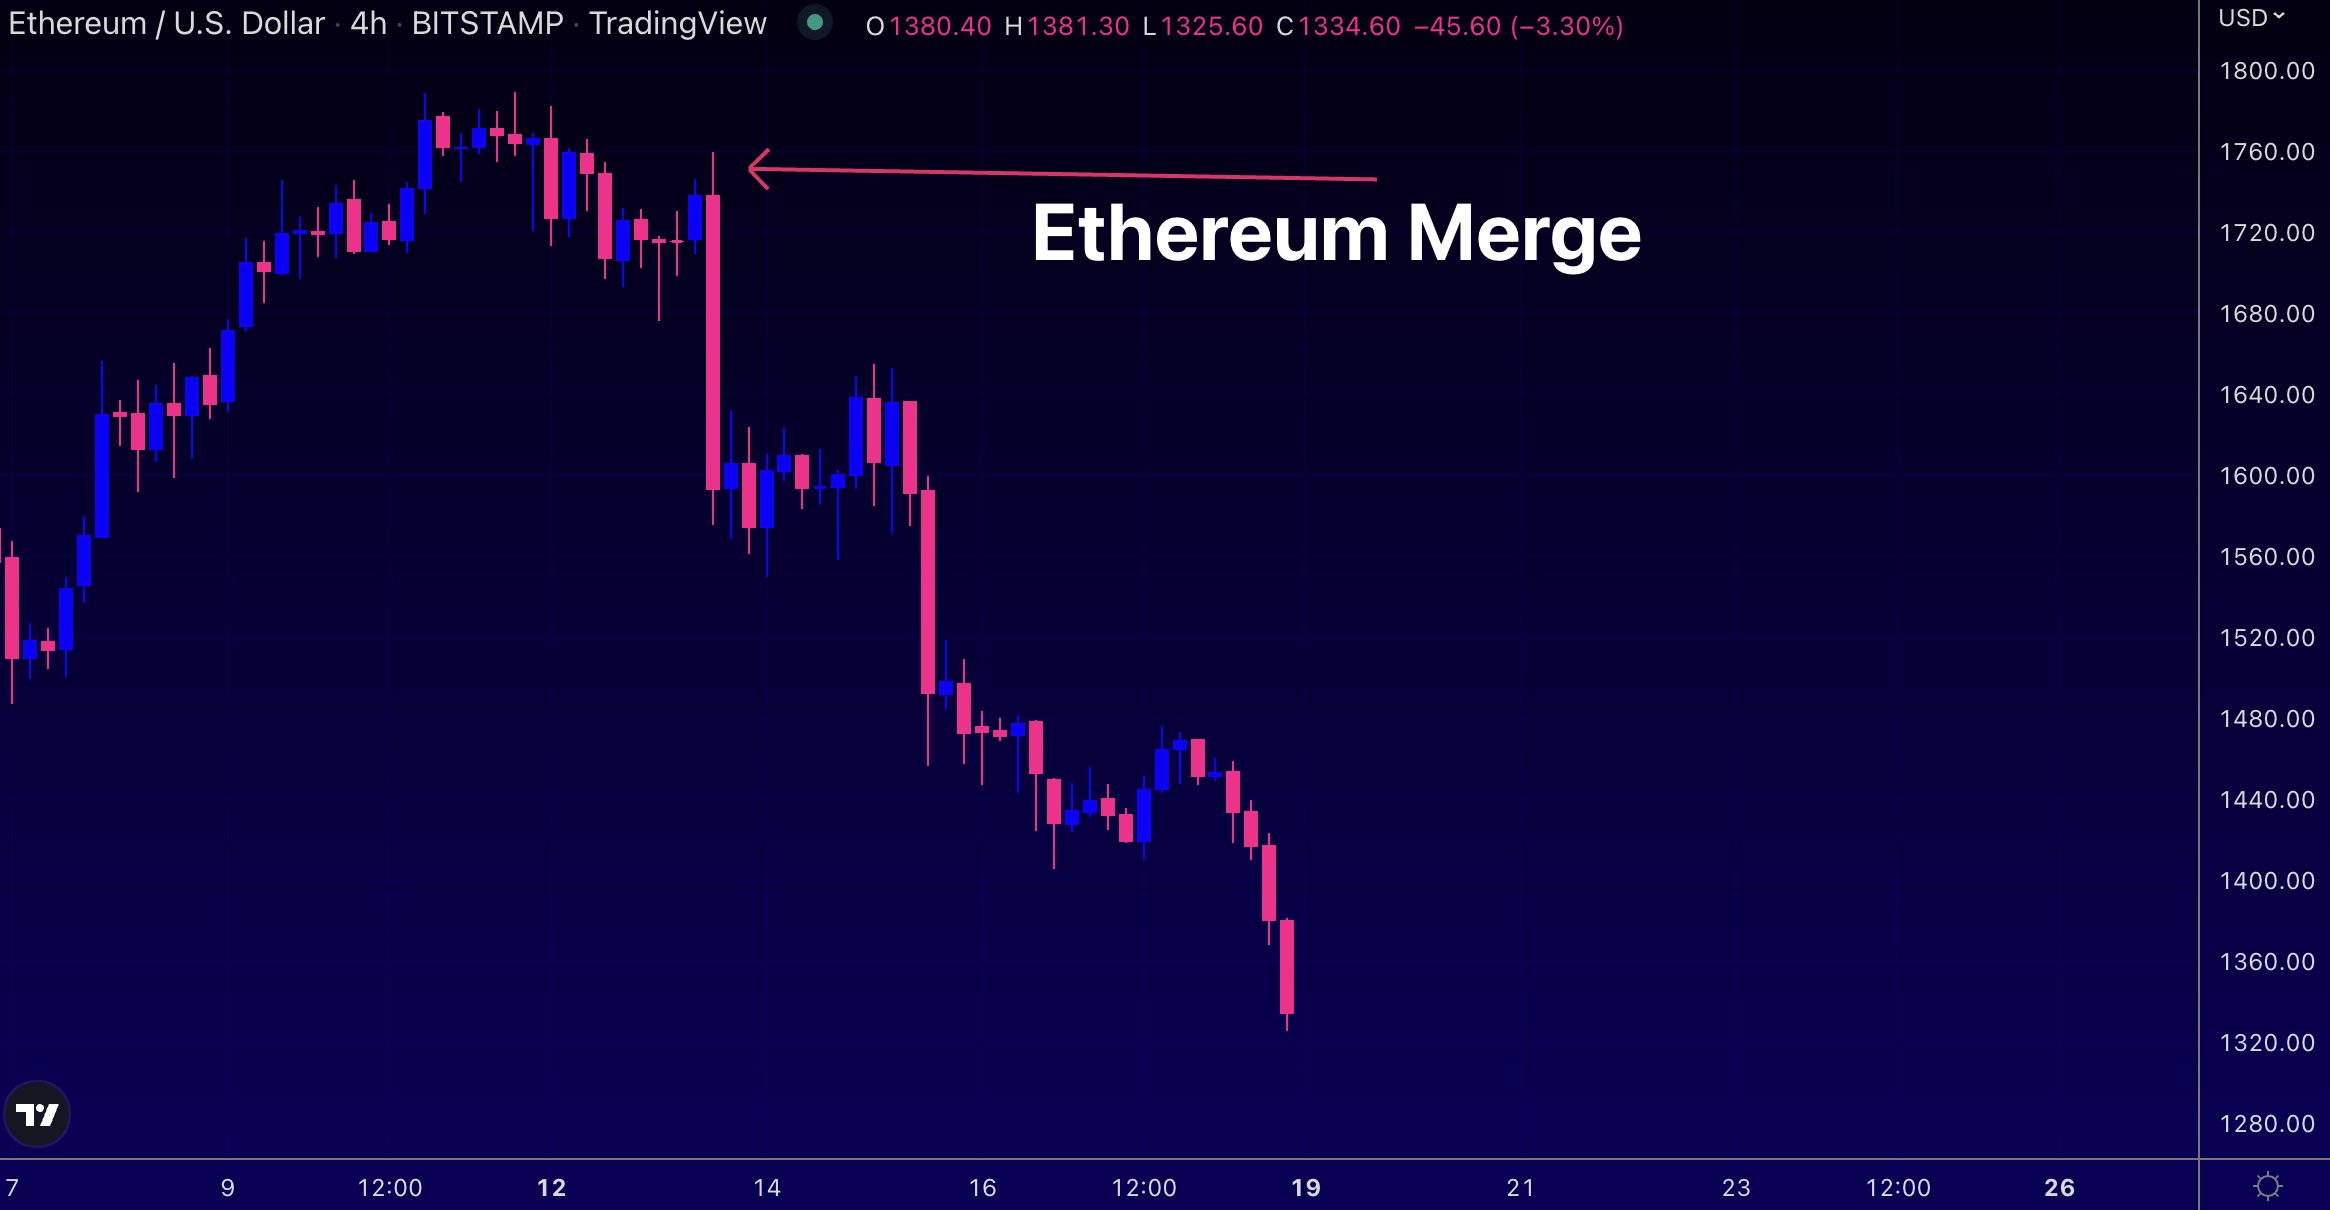 Ethereum price decline post Merge